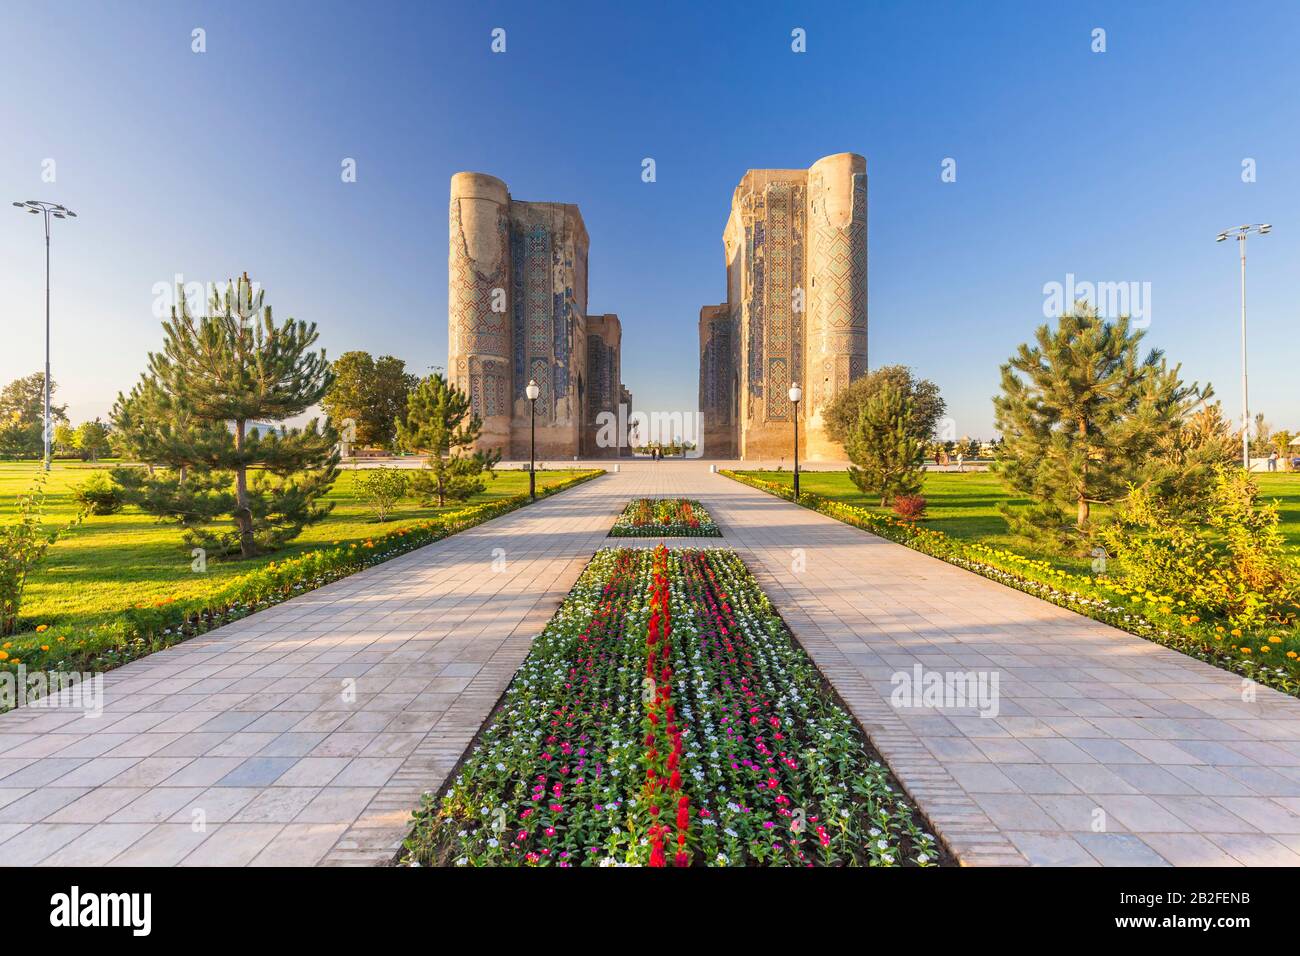 AK Saray Palace, al mattino, Shahrisabz, o Shakhrisabz, Qashqadaryo Regione, Uzbekistan, Asia Centrale, Asia Foto Stock